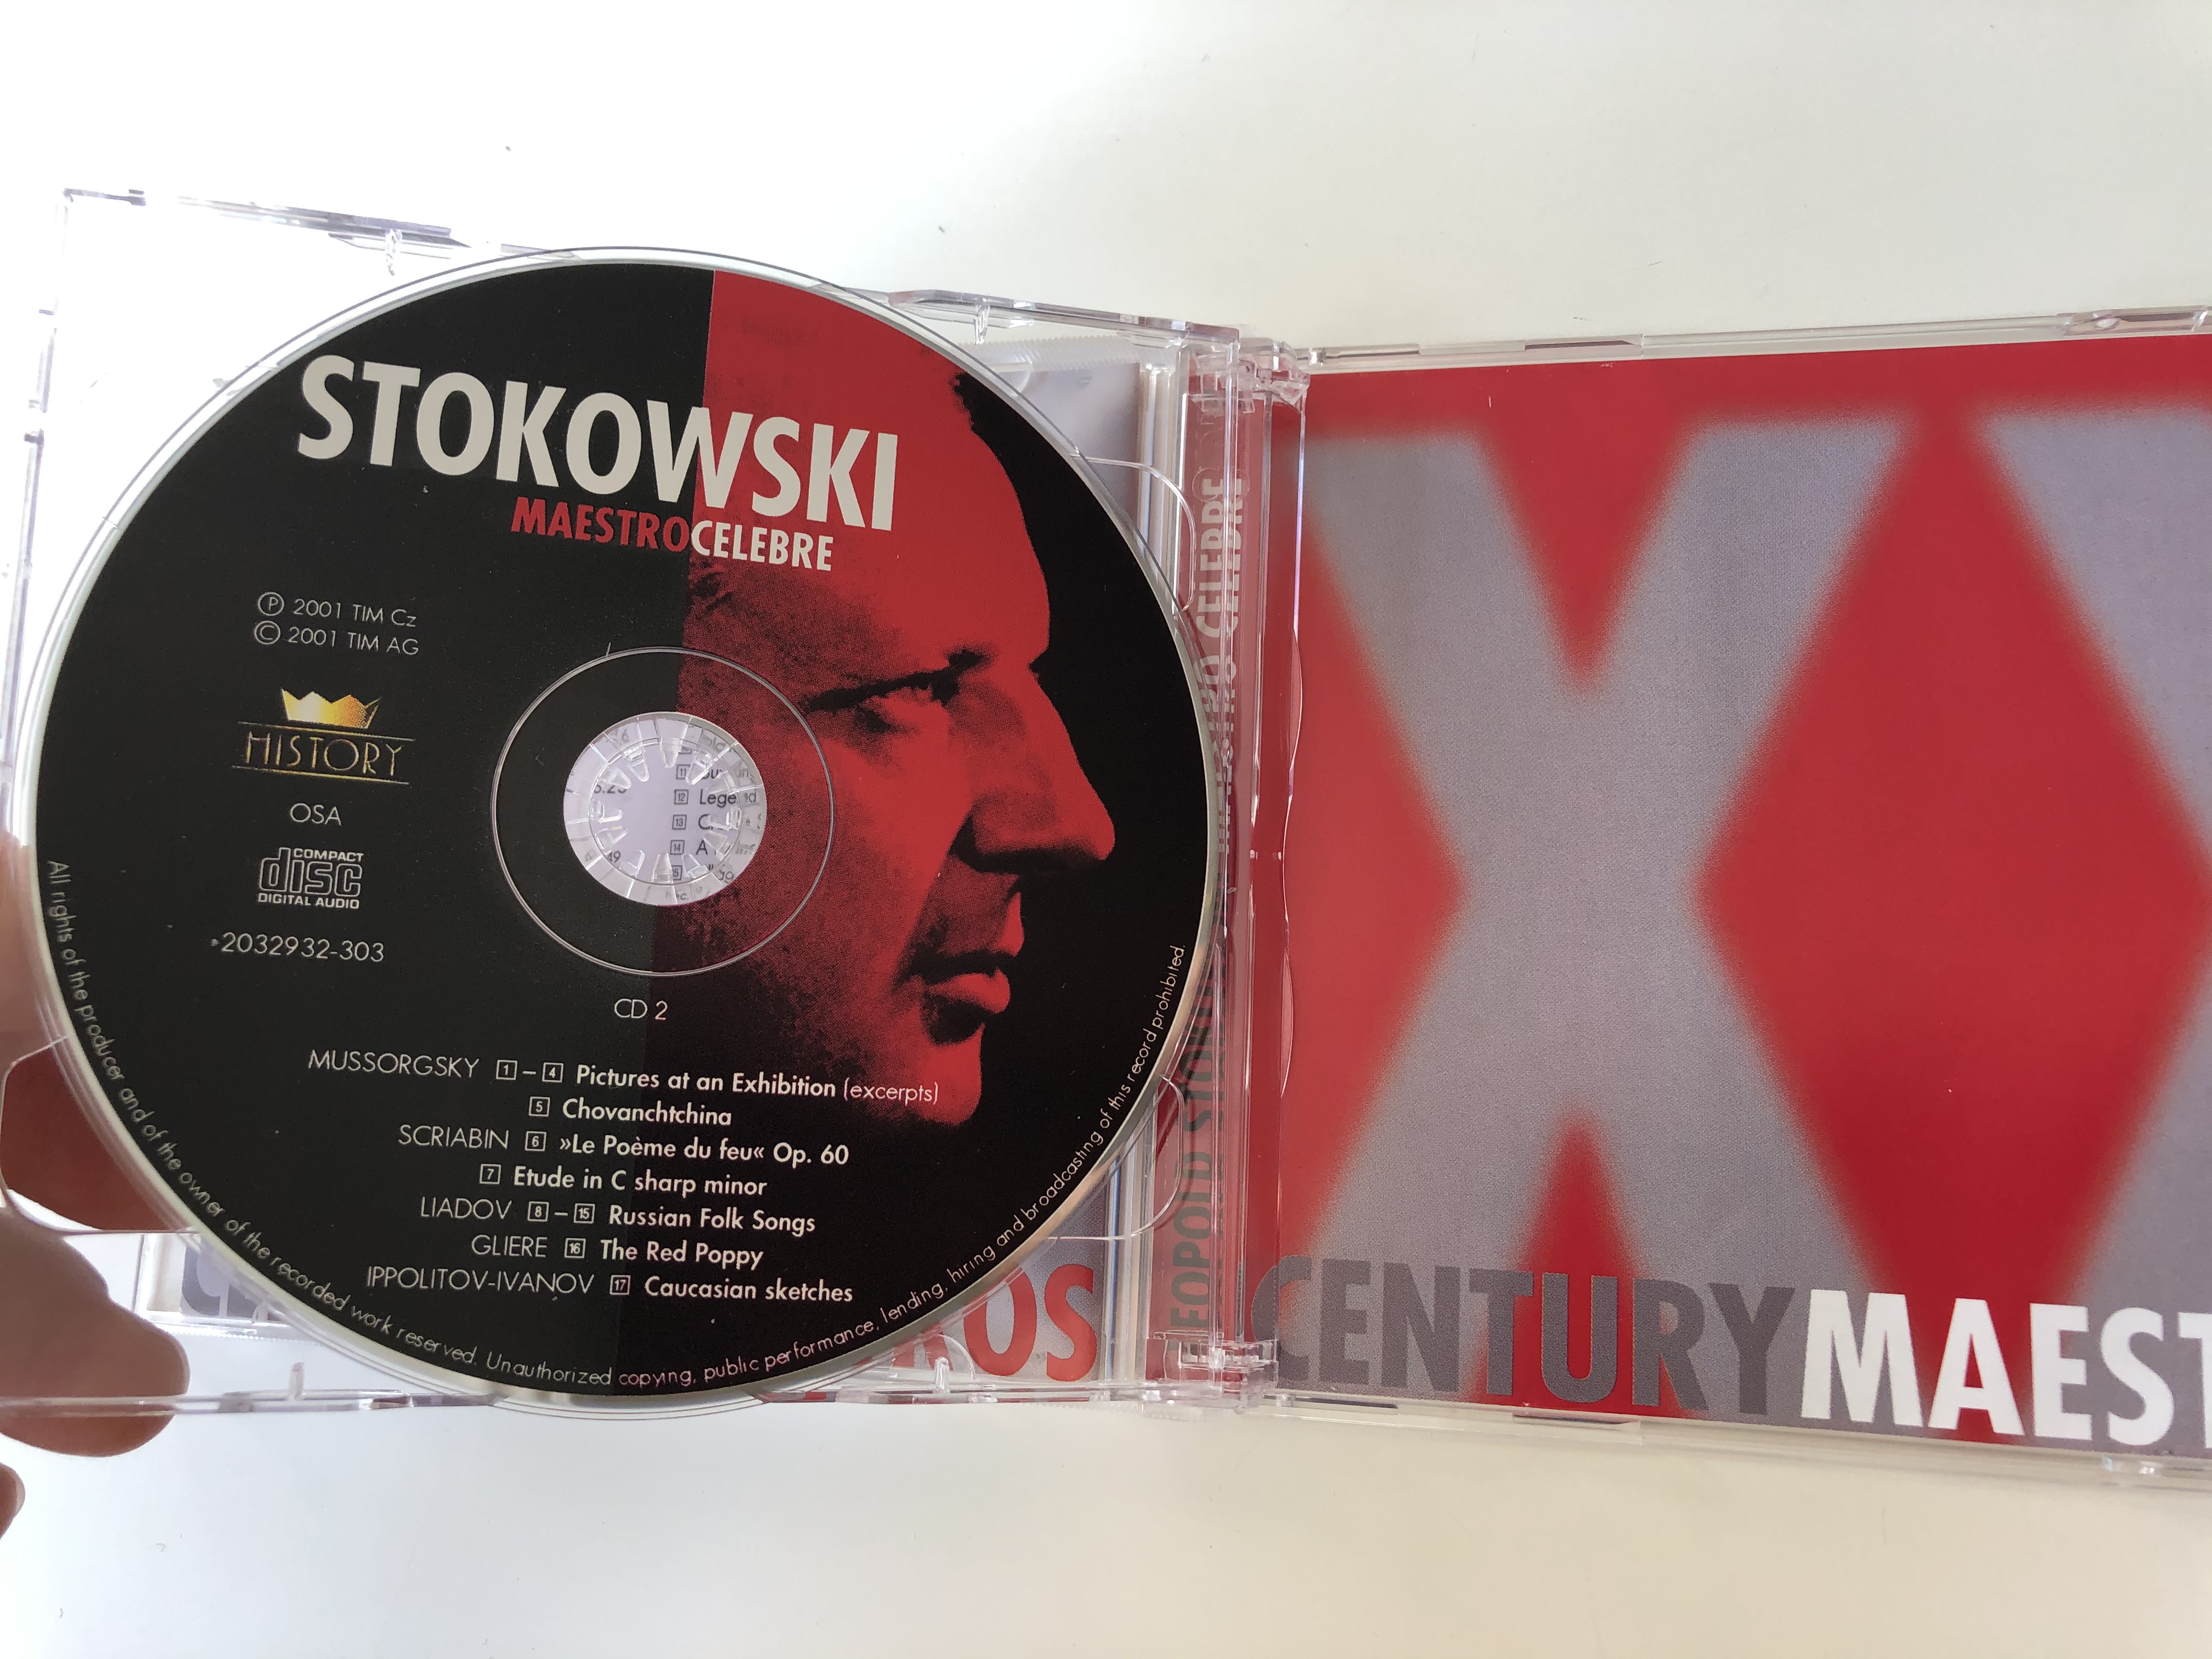 stokowski-maestro-celebre-russian-masters-history-2x-audio-cd-2001-203293-303-7-.jpg